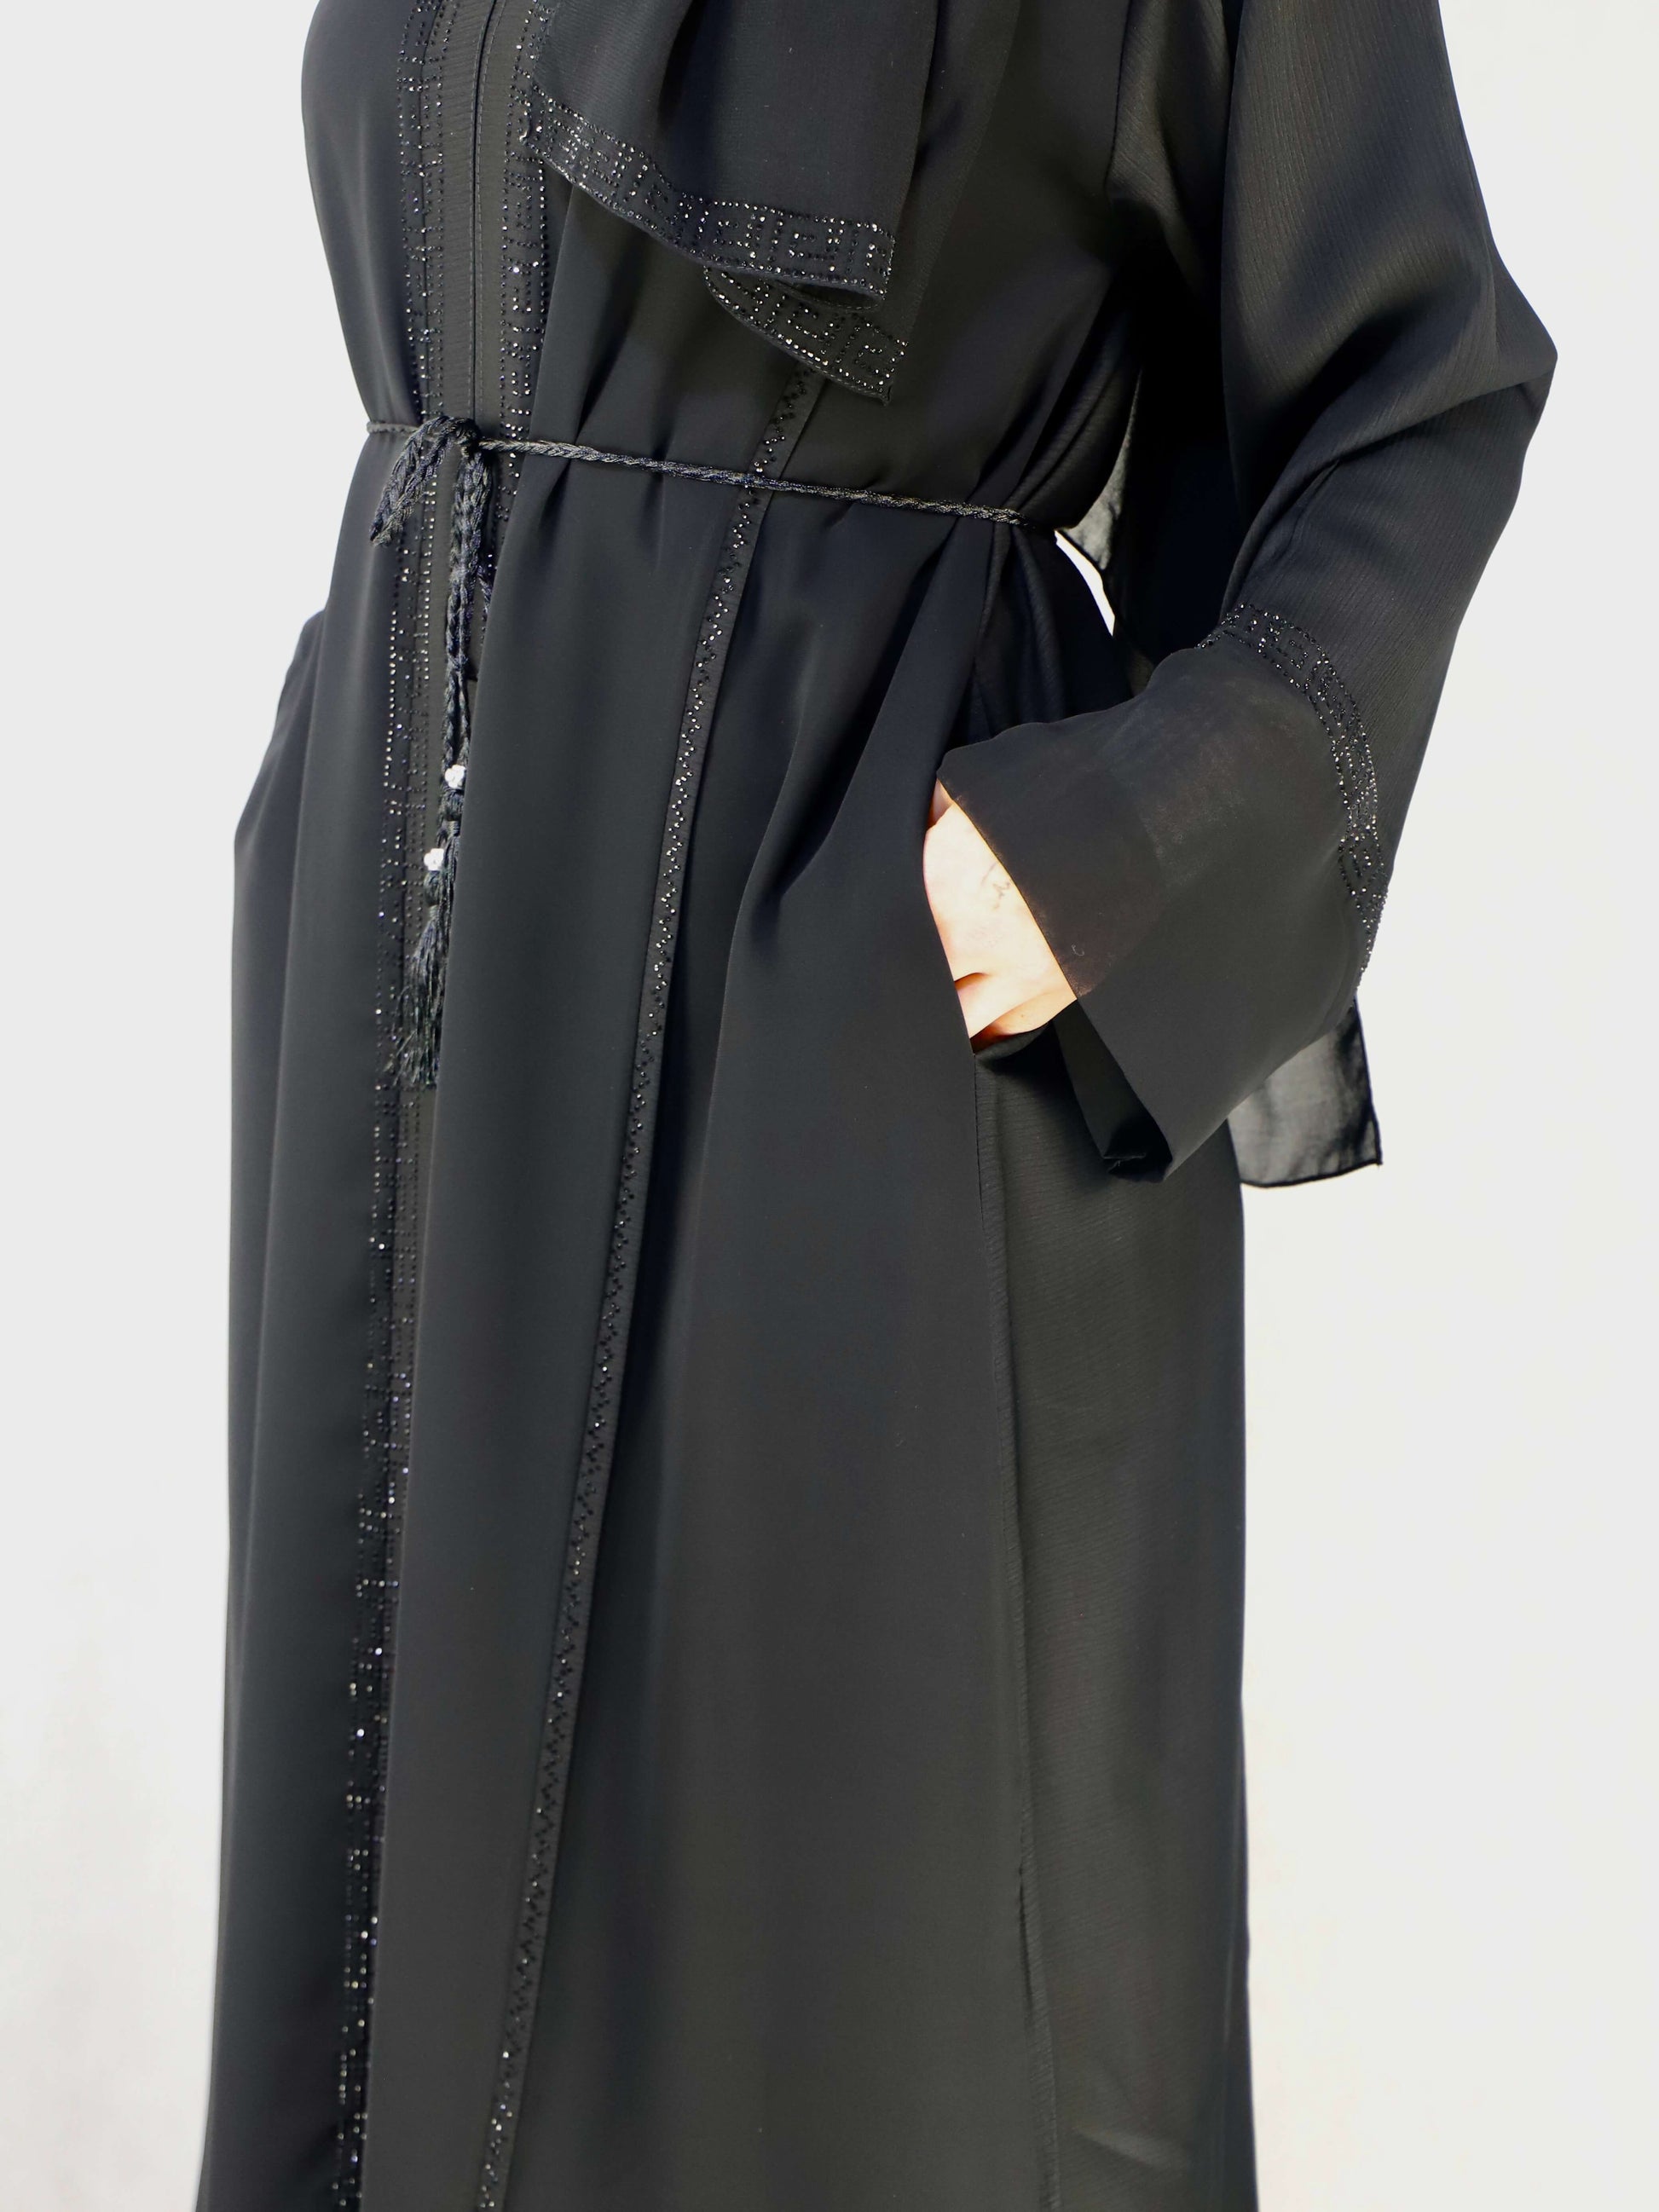 chiffon Abaya And zoom material black abaya For Women with  pockets,"abaya, abayas,modest abaya dress, modest dresses, black abaya, modest dress, abaya united kingdom, white abaya, abaya for women, modest dresses for women, modest maxi dresses, women abaya, abaya dress dresses, abayas for women, jilbab abaya islamic clothing modest clothing for women modest clothing dresses"; 